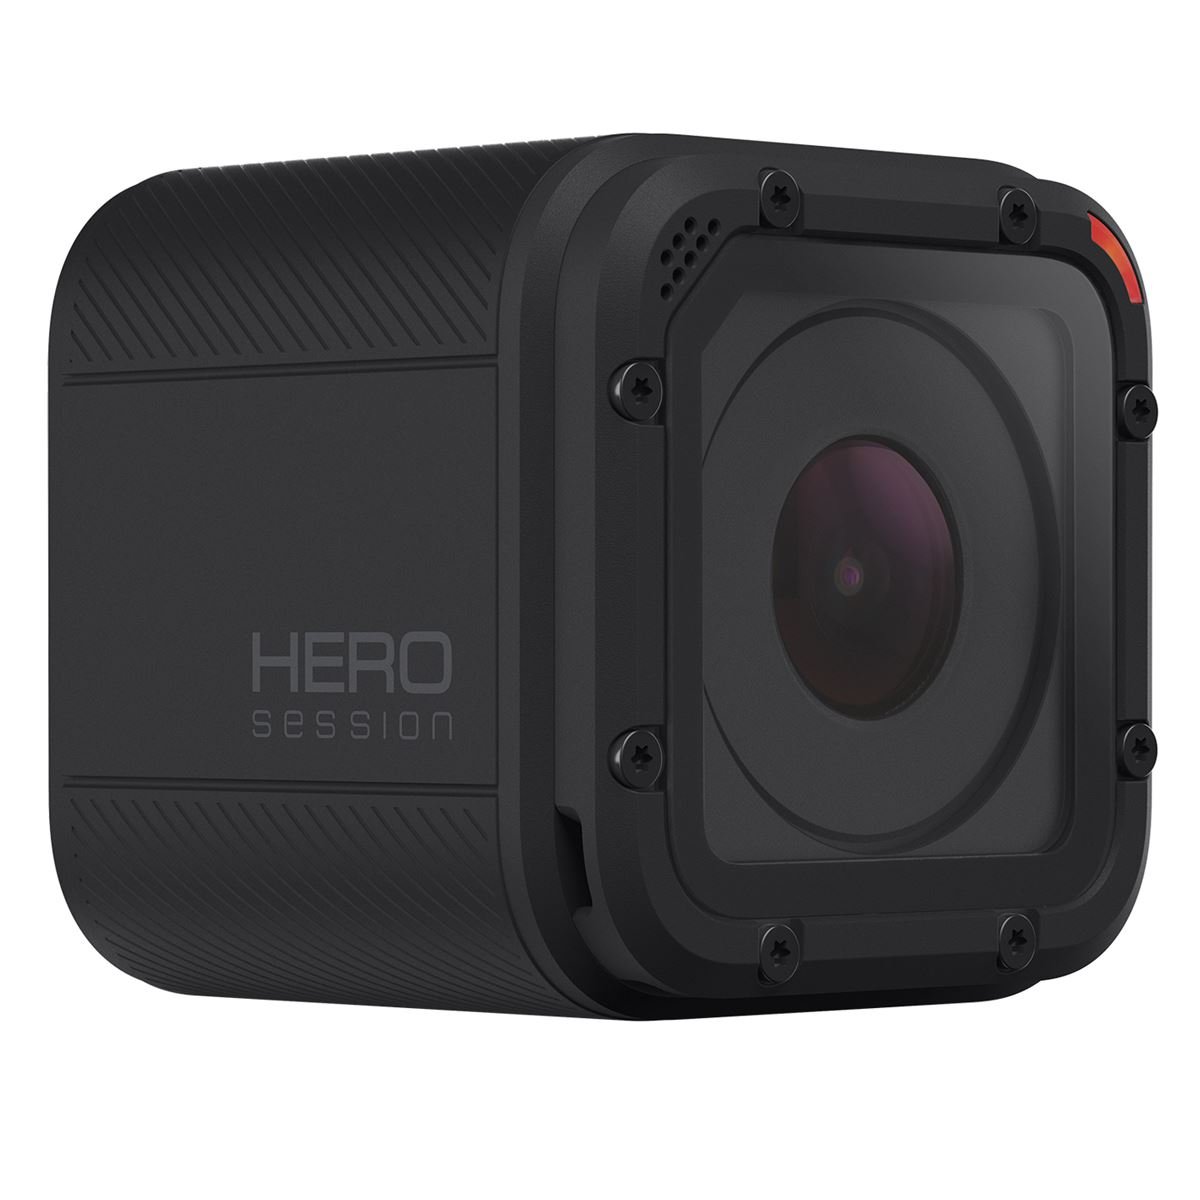 Videocamara GoPro Hero Session 8mp